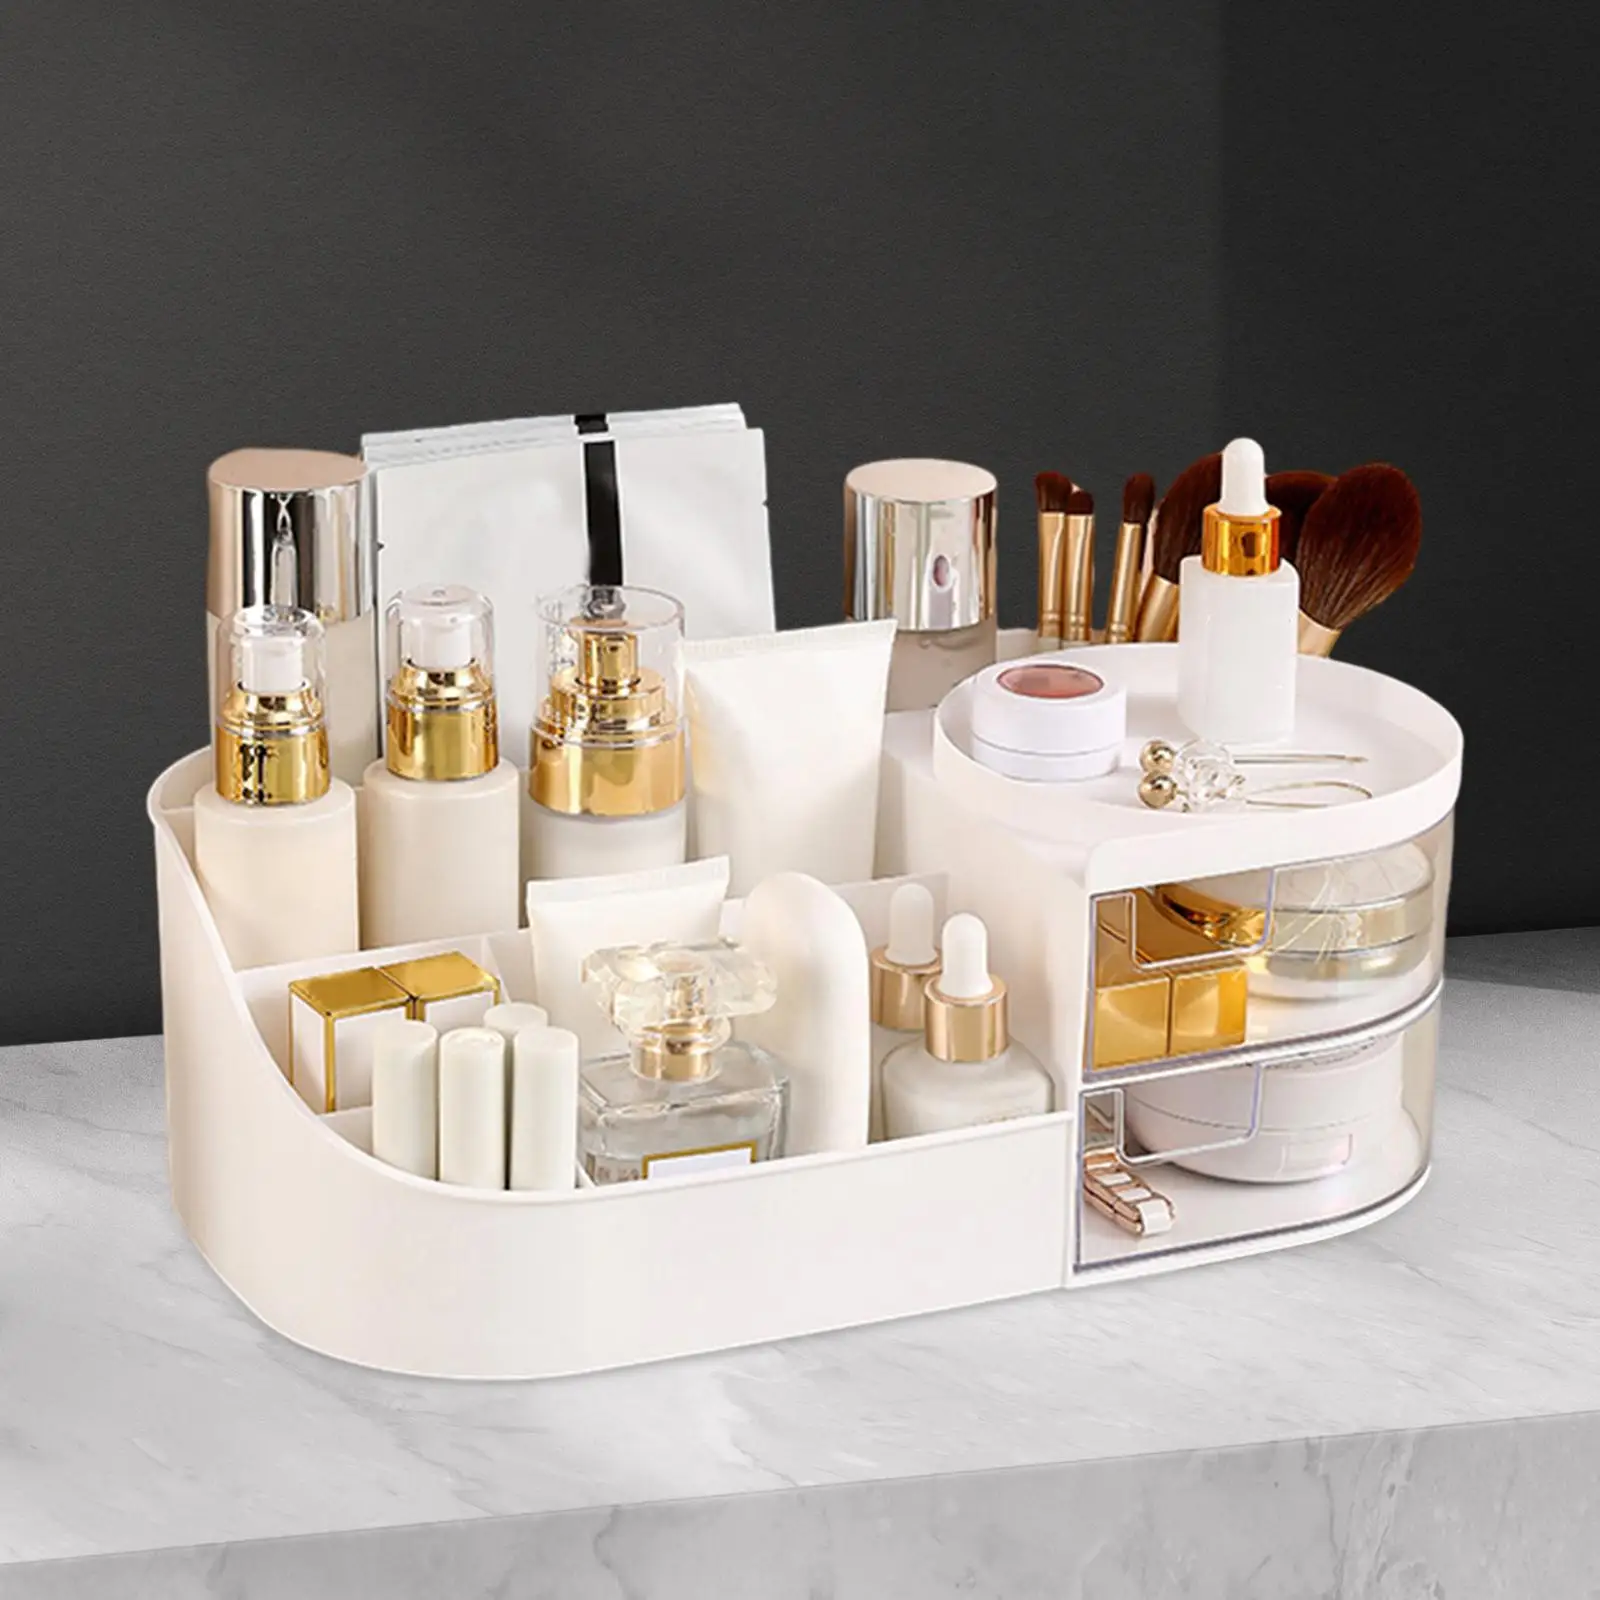 Makeup Holder Multifunctional Vanity Desk Organizer Cosmetic Storage Unit Dresser Container for Vanity Home Bedroom Office Gift